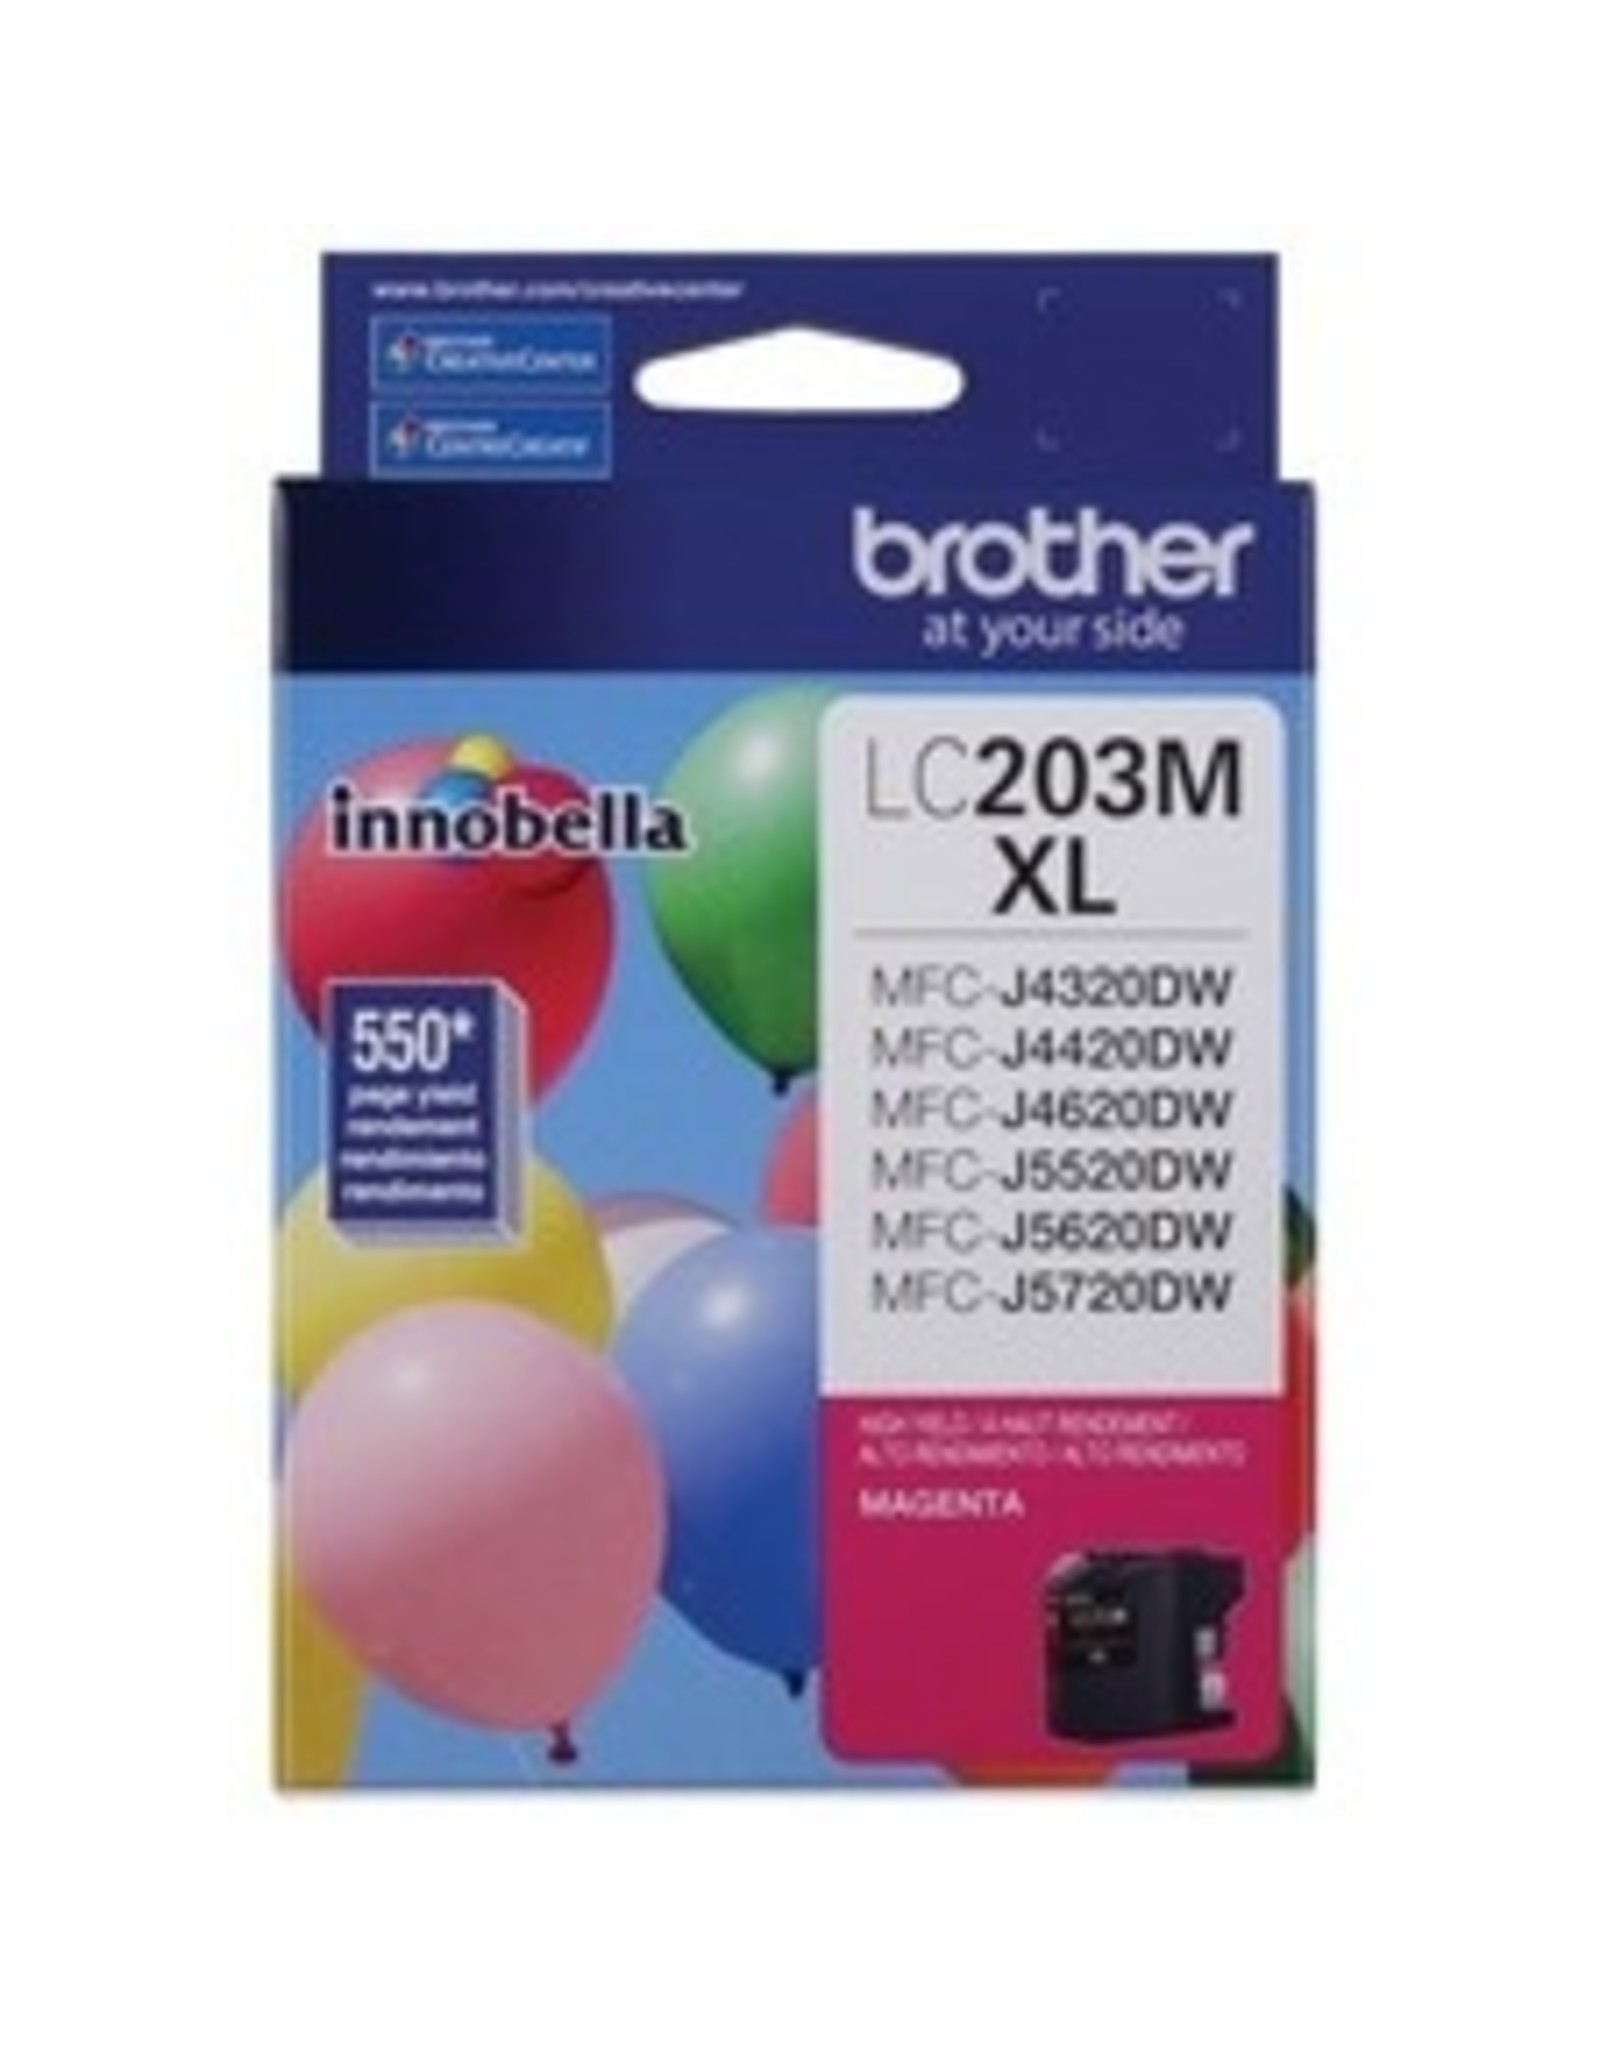 Brother Brother Innobella LC203MS Original Ink Cartridge - Magenta